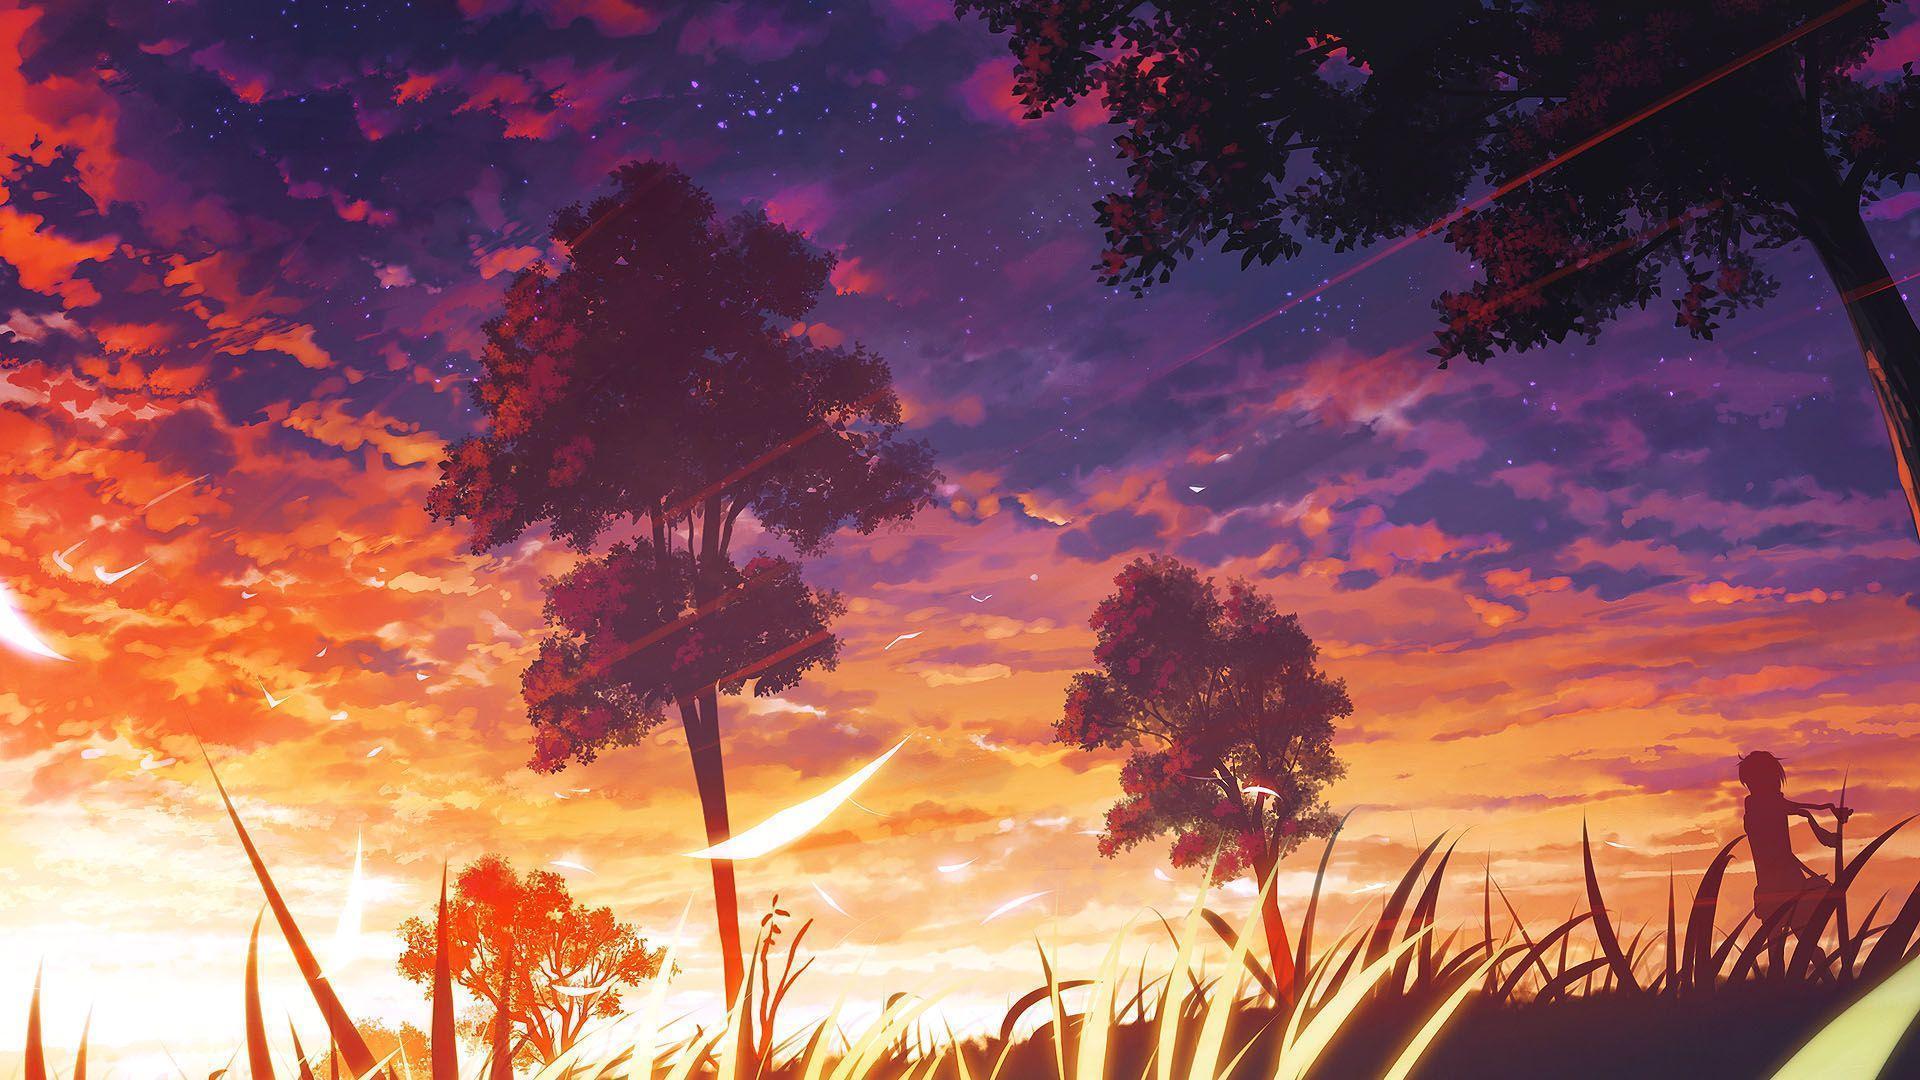 Anime Wallpaper: Anime Landscape Wallpaper High Quality Beautiful